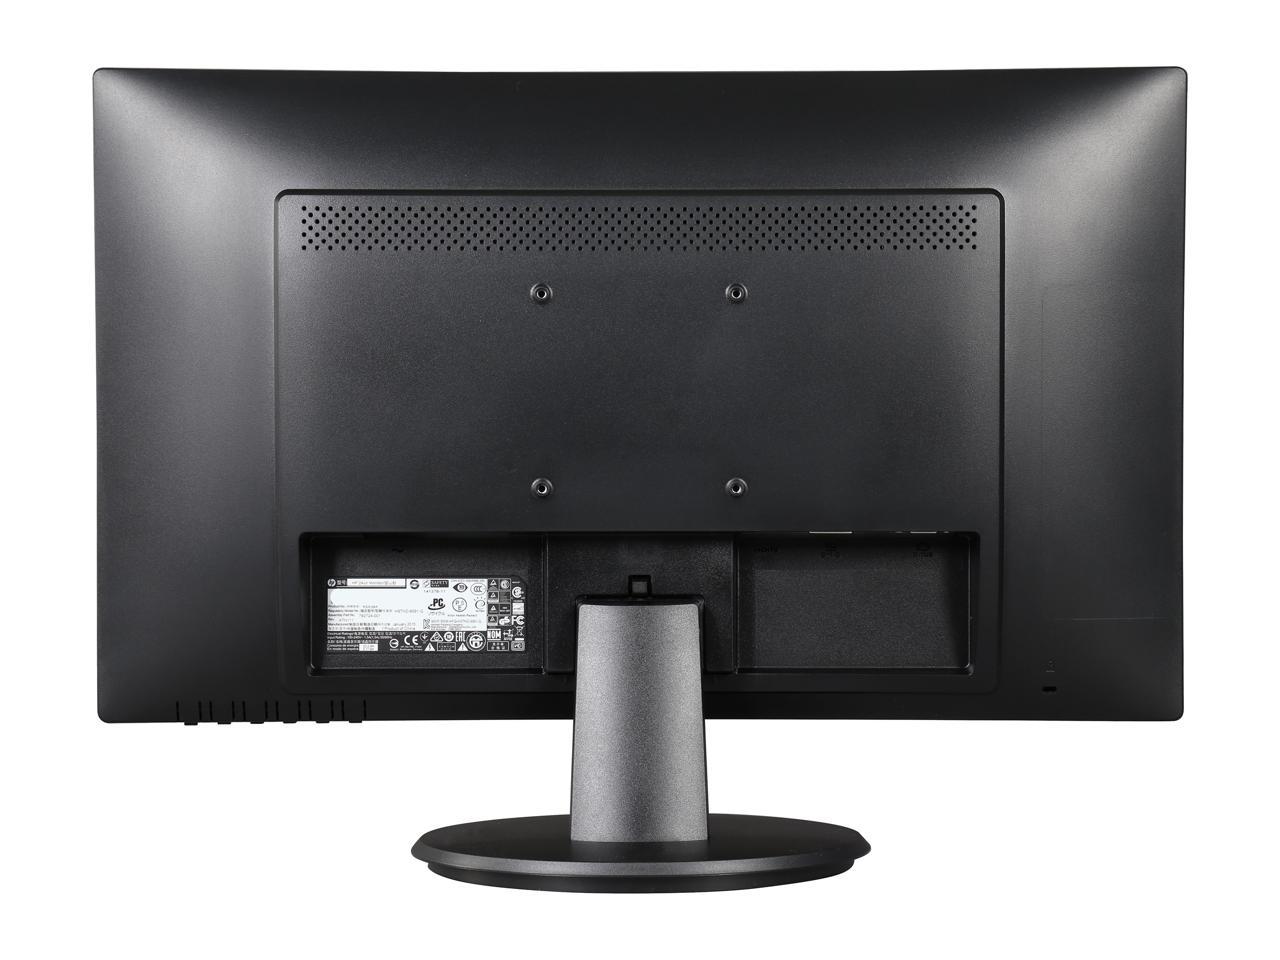 HP 24UH Black 24" TN LCD / LED Monitor, 250 cd/m2 DCR 10,000,000:1 (1000:1), Vesa Mountable, HDMI DVI-D VGA